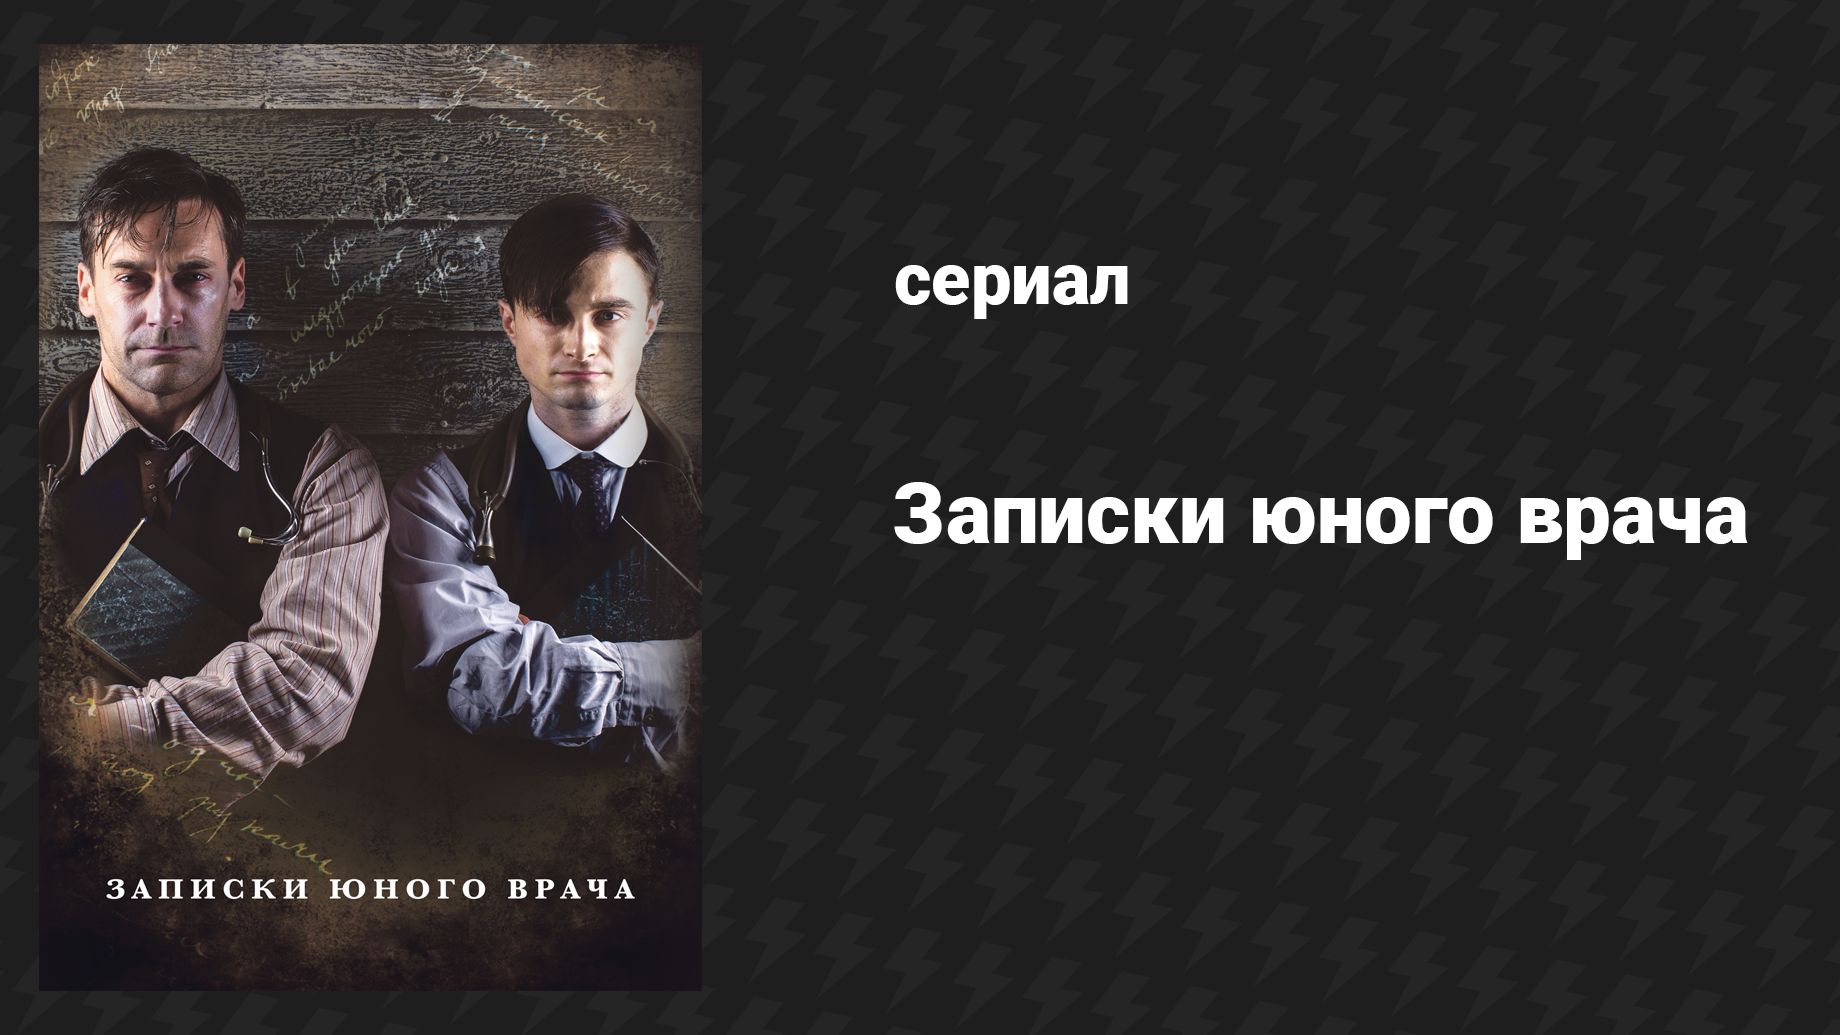 Записки юного врача 1 сезон 3 серия (сериал, 2012)